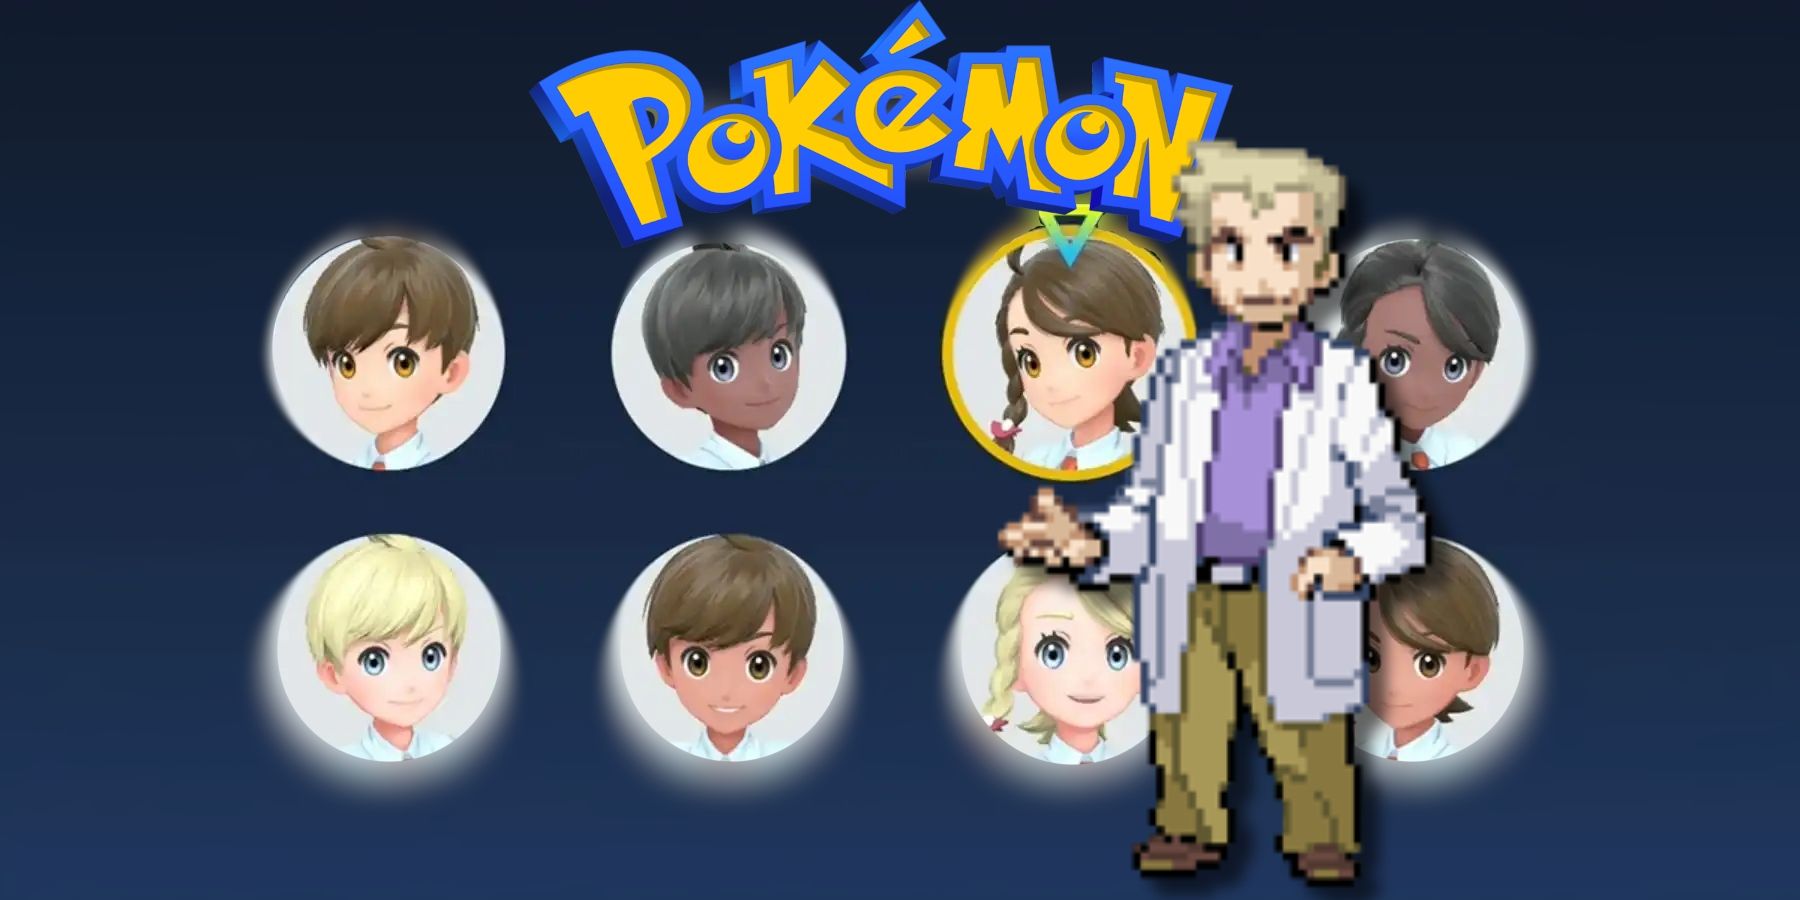 pokemon professor oak gender character boy or girl